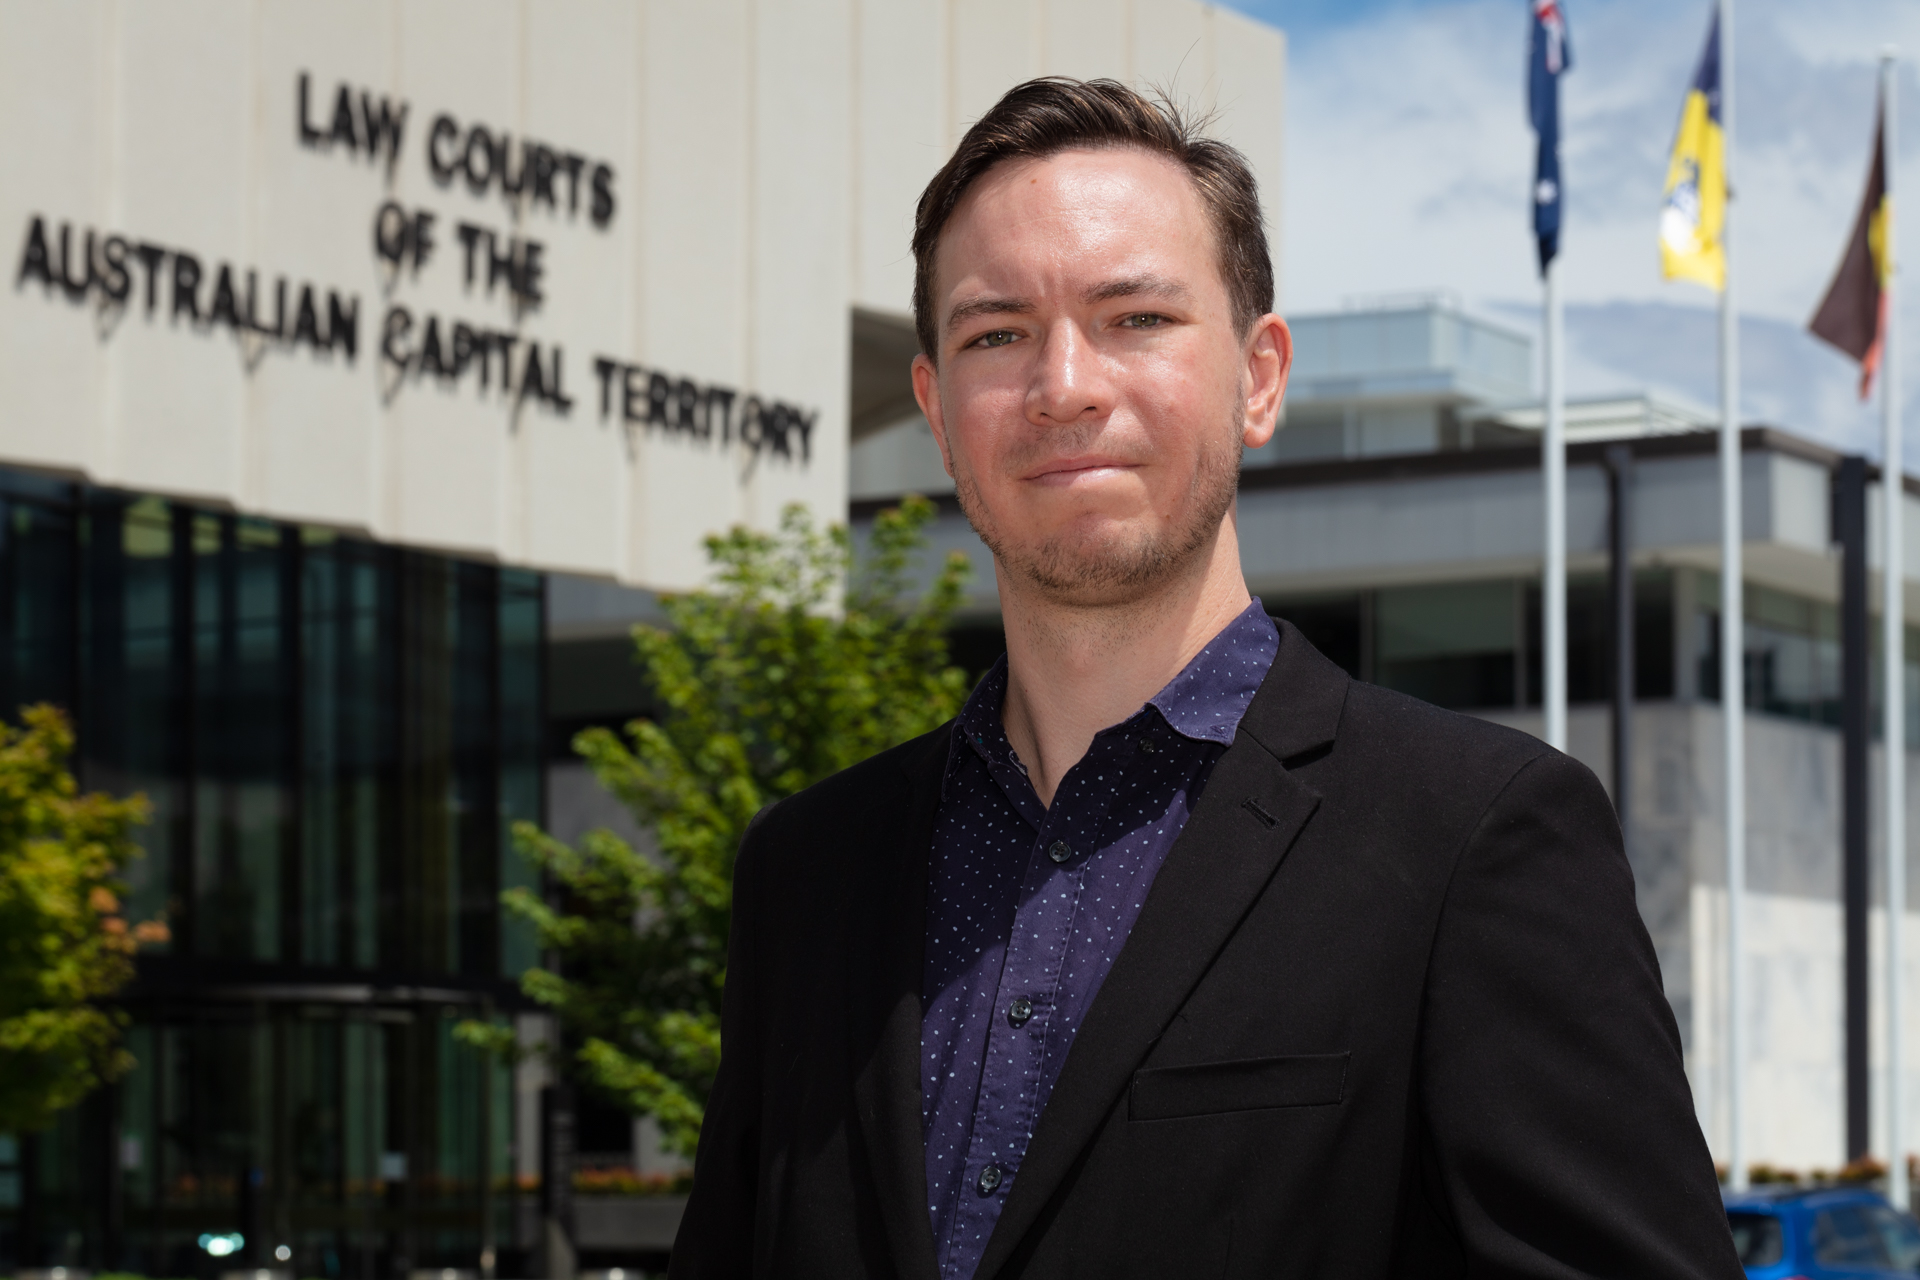 Albert McKnight heads up Region Media's court coverage